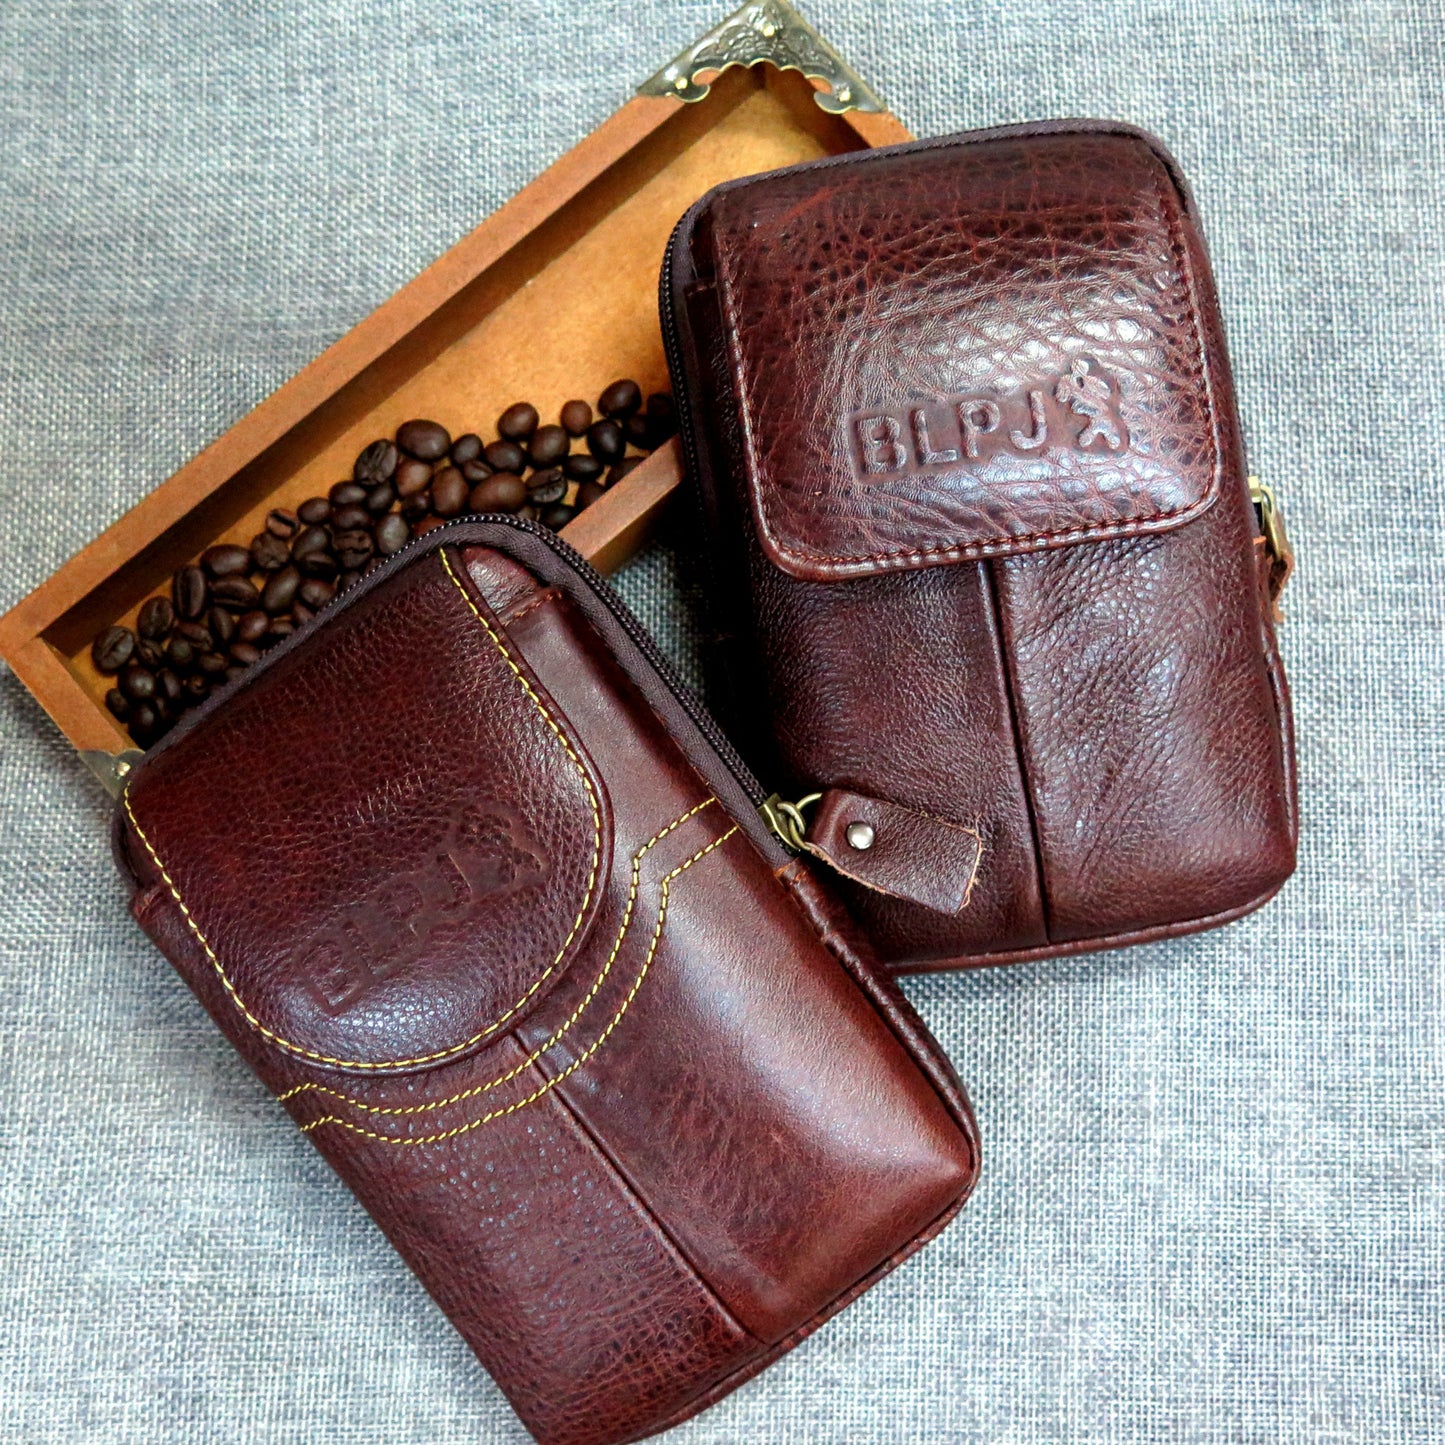 2021 new type of hot selling men's 6 size belt and leather belt multifunction leather handbag handbag